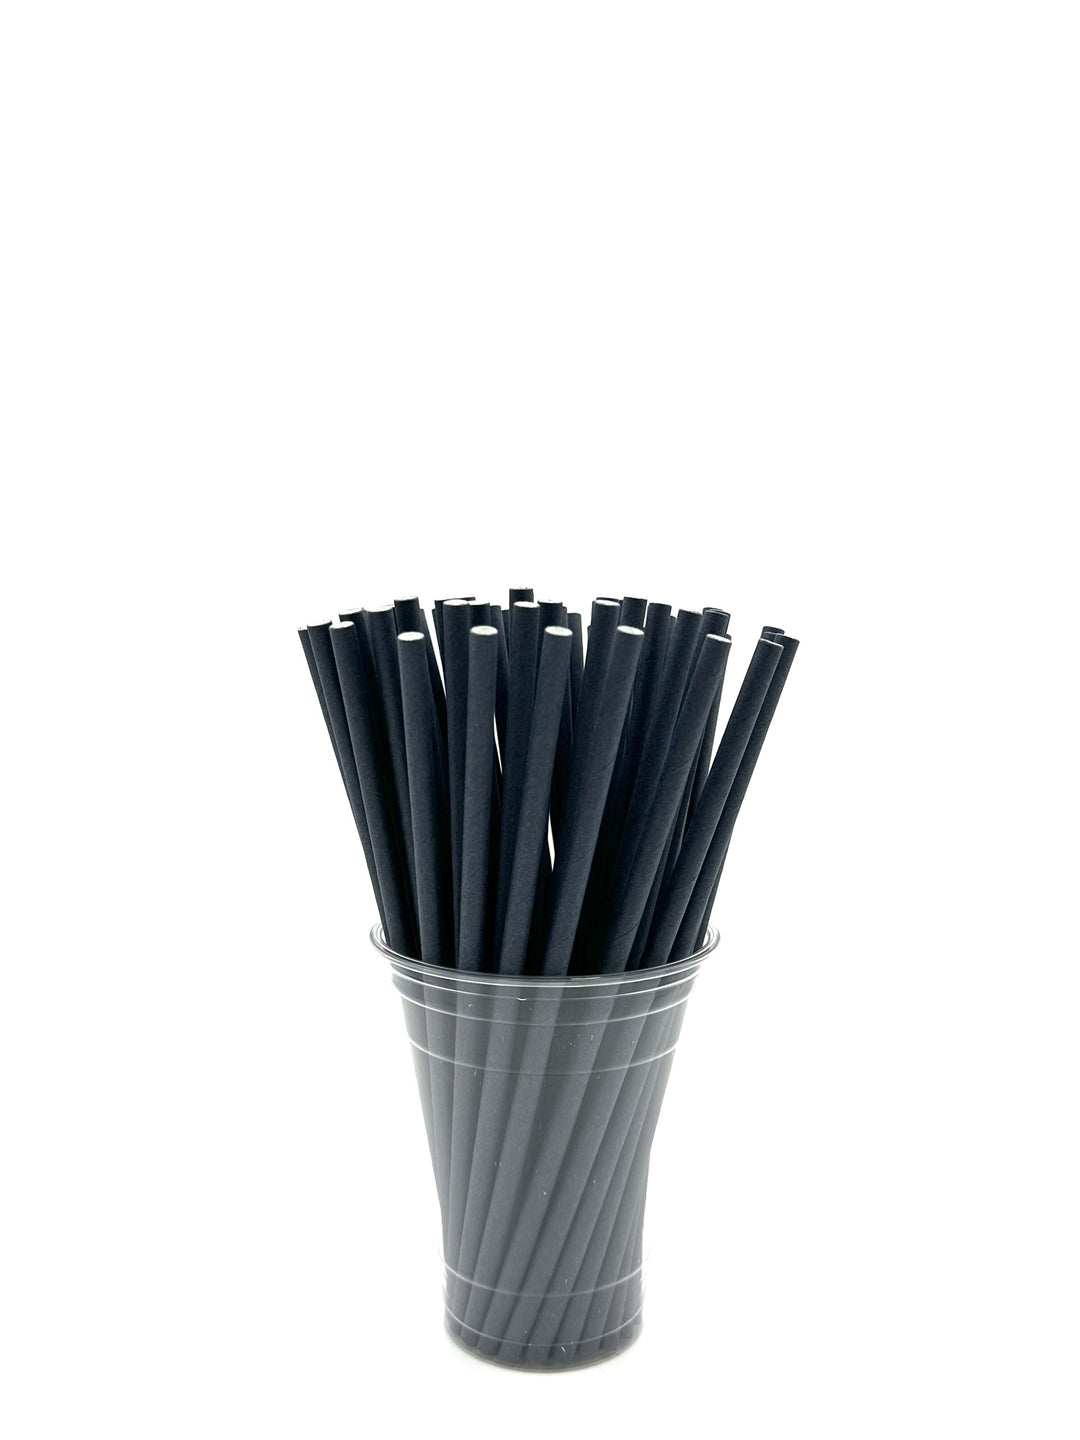 Solid Black Paper Straws